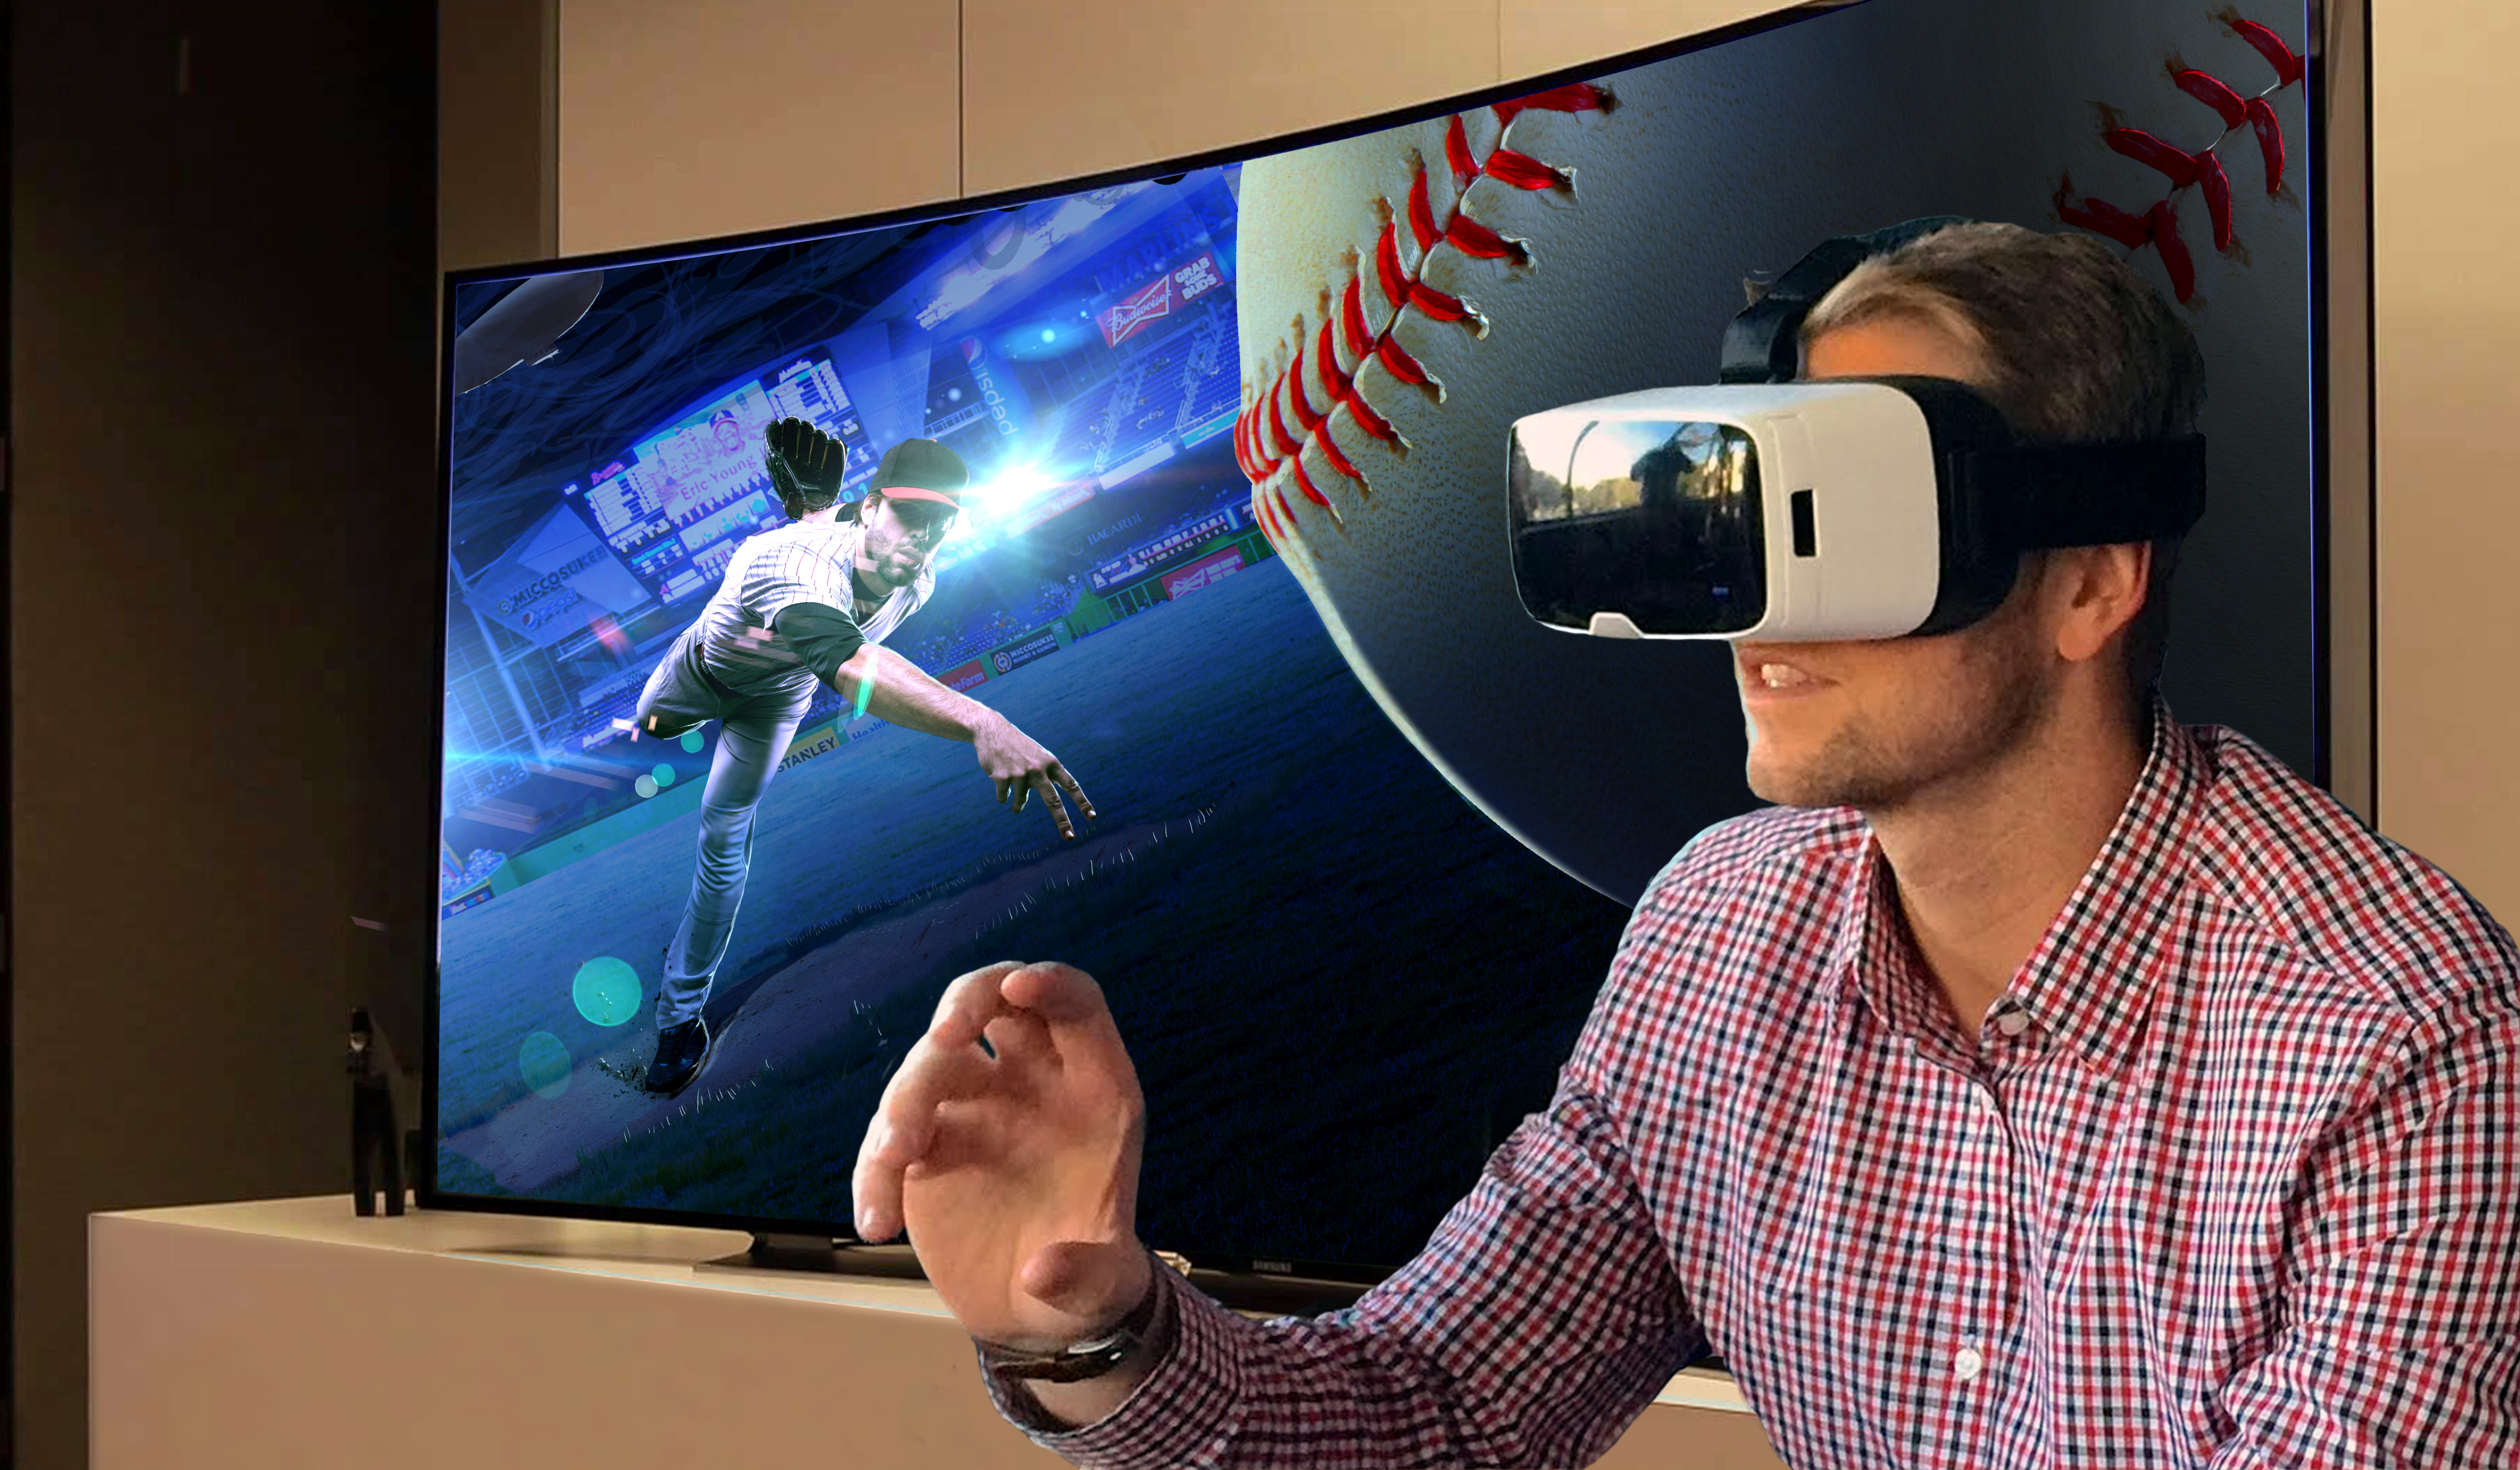 VR Sports